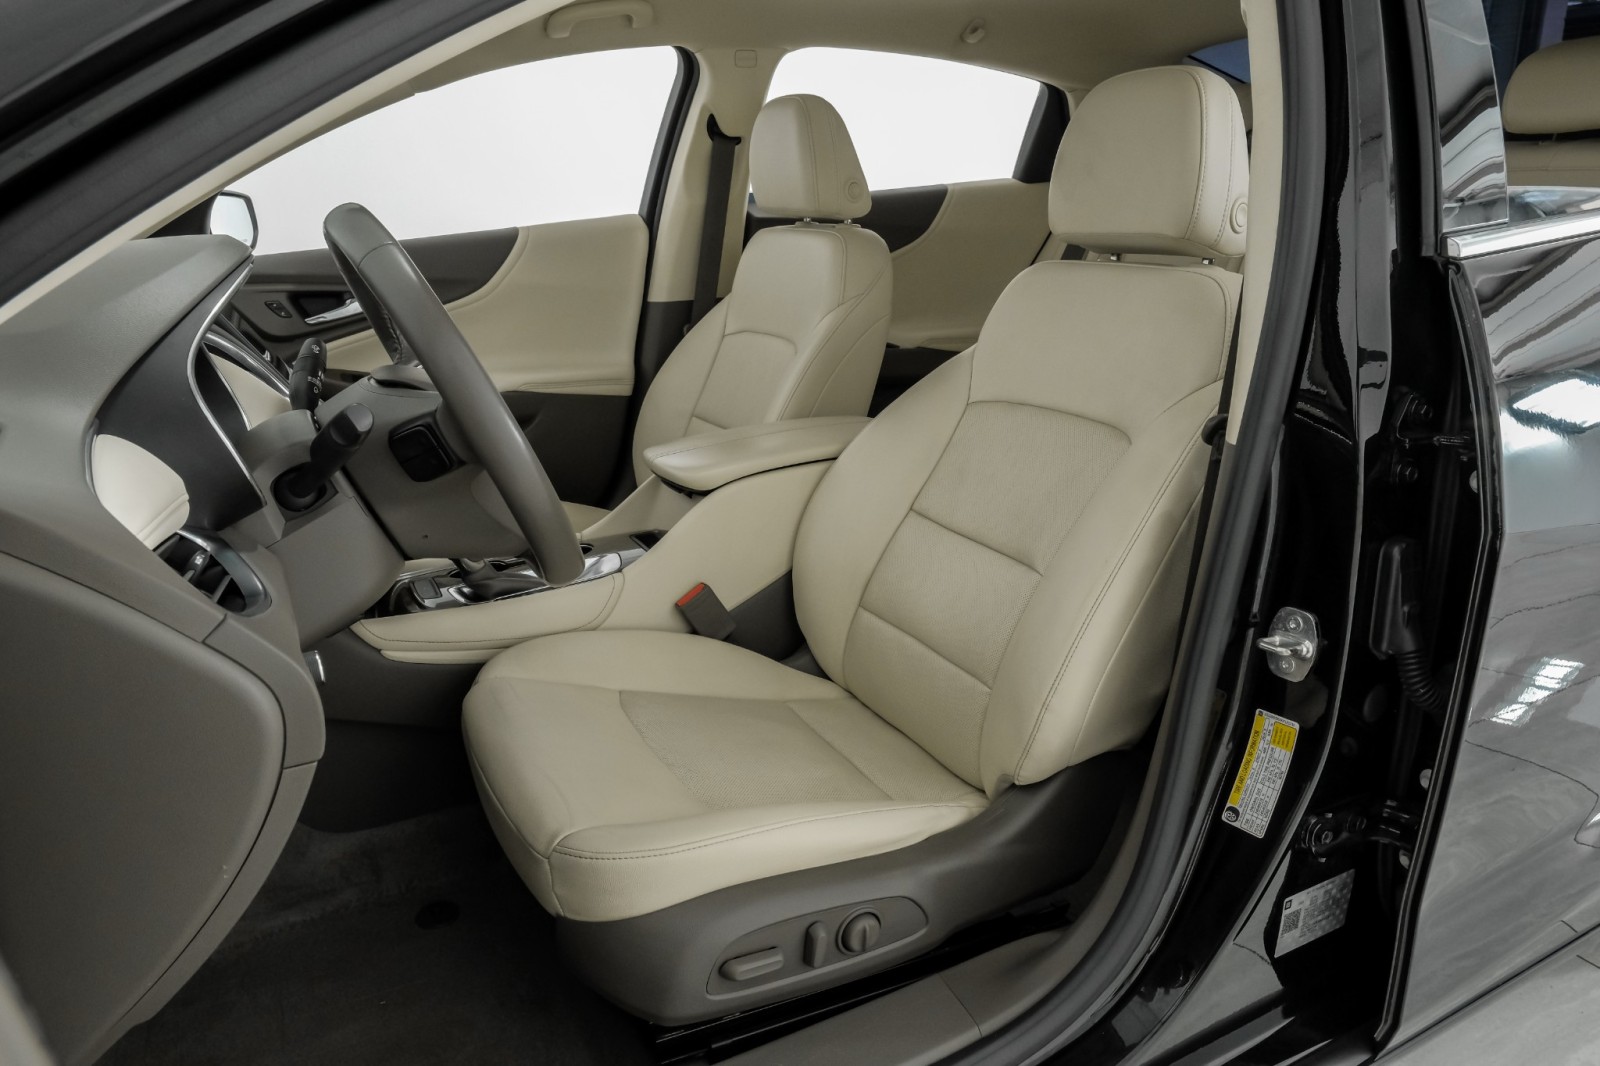 2019 Chevrolet Malibu PREMIER NAVIGATION LEATHER SEATS REAR CAMERA KEYEL 15